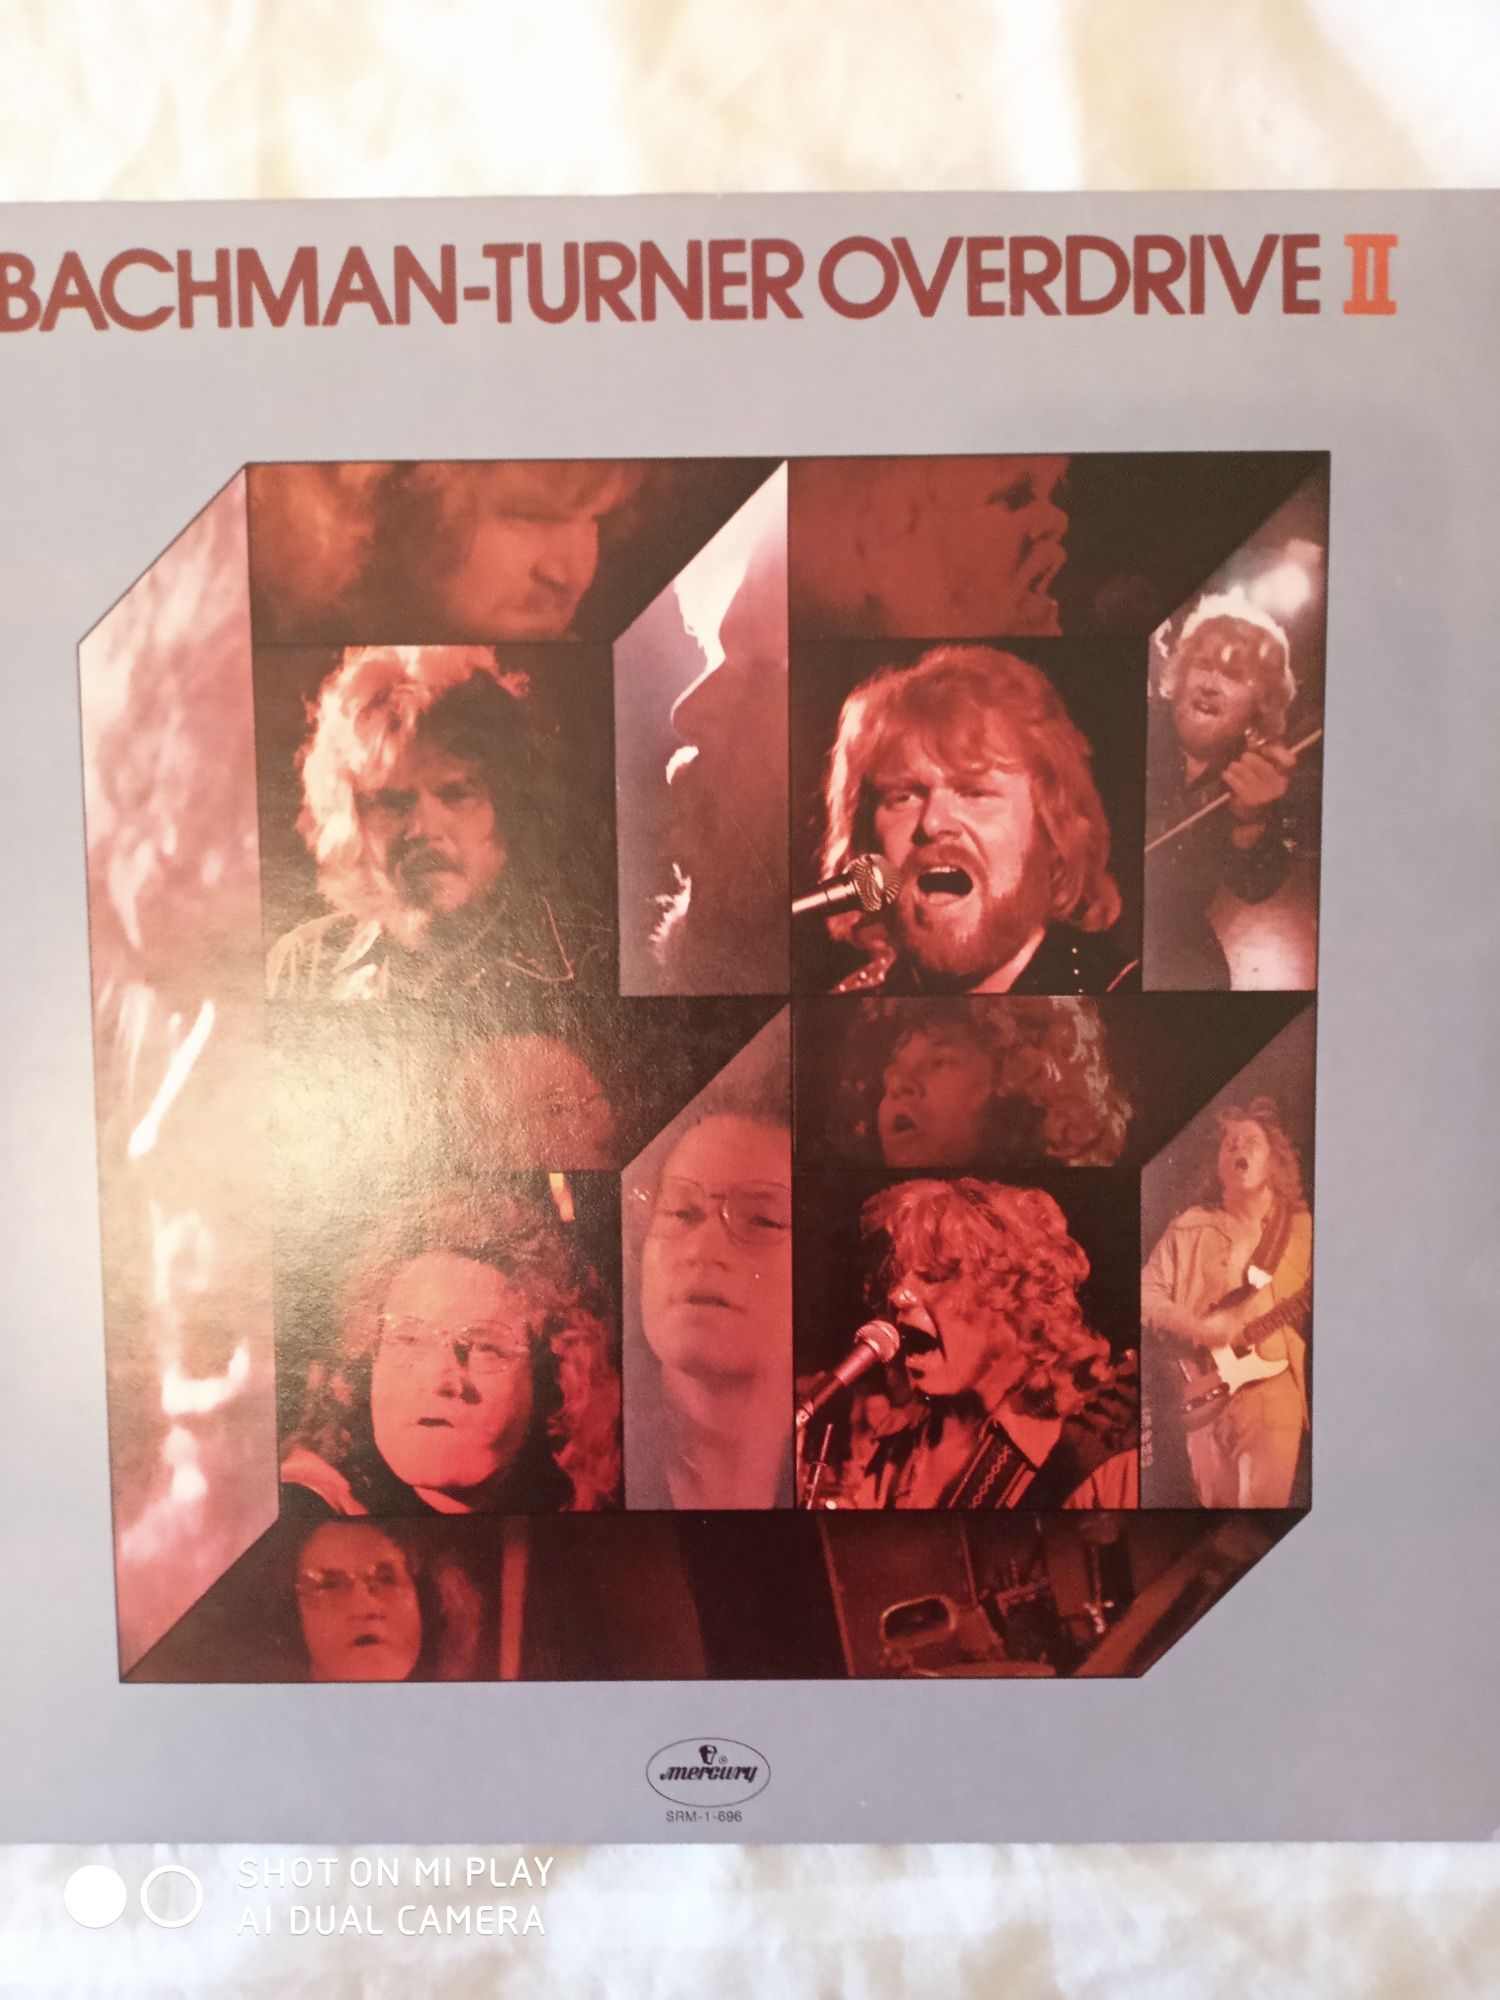 Bachman - Turner Overdrive 2